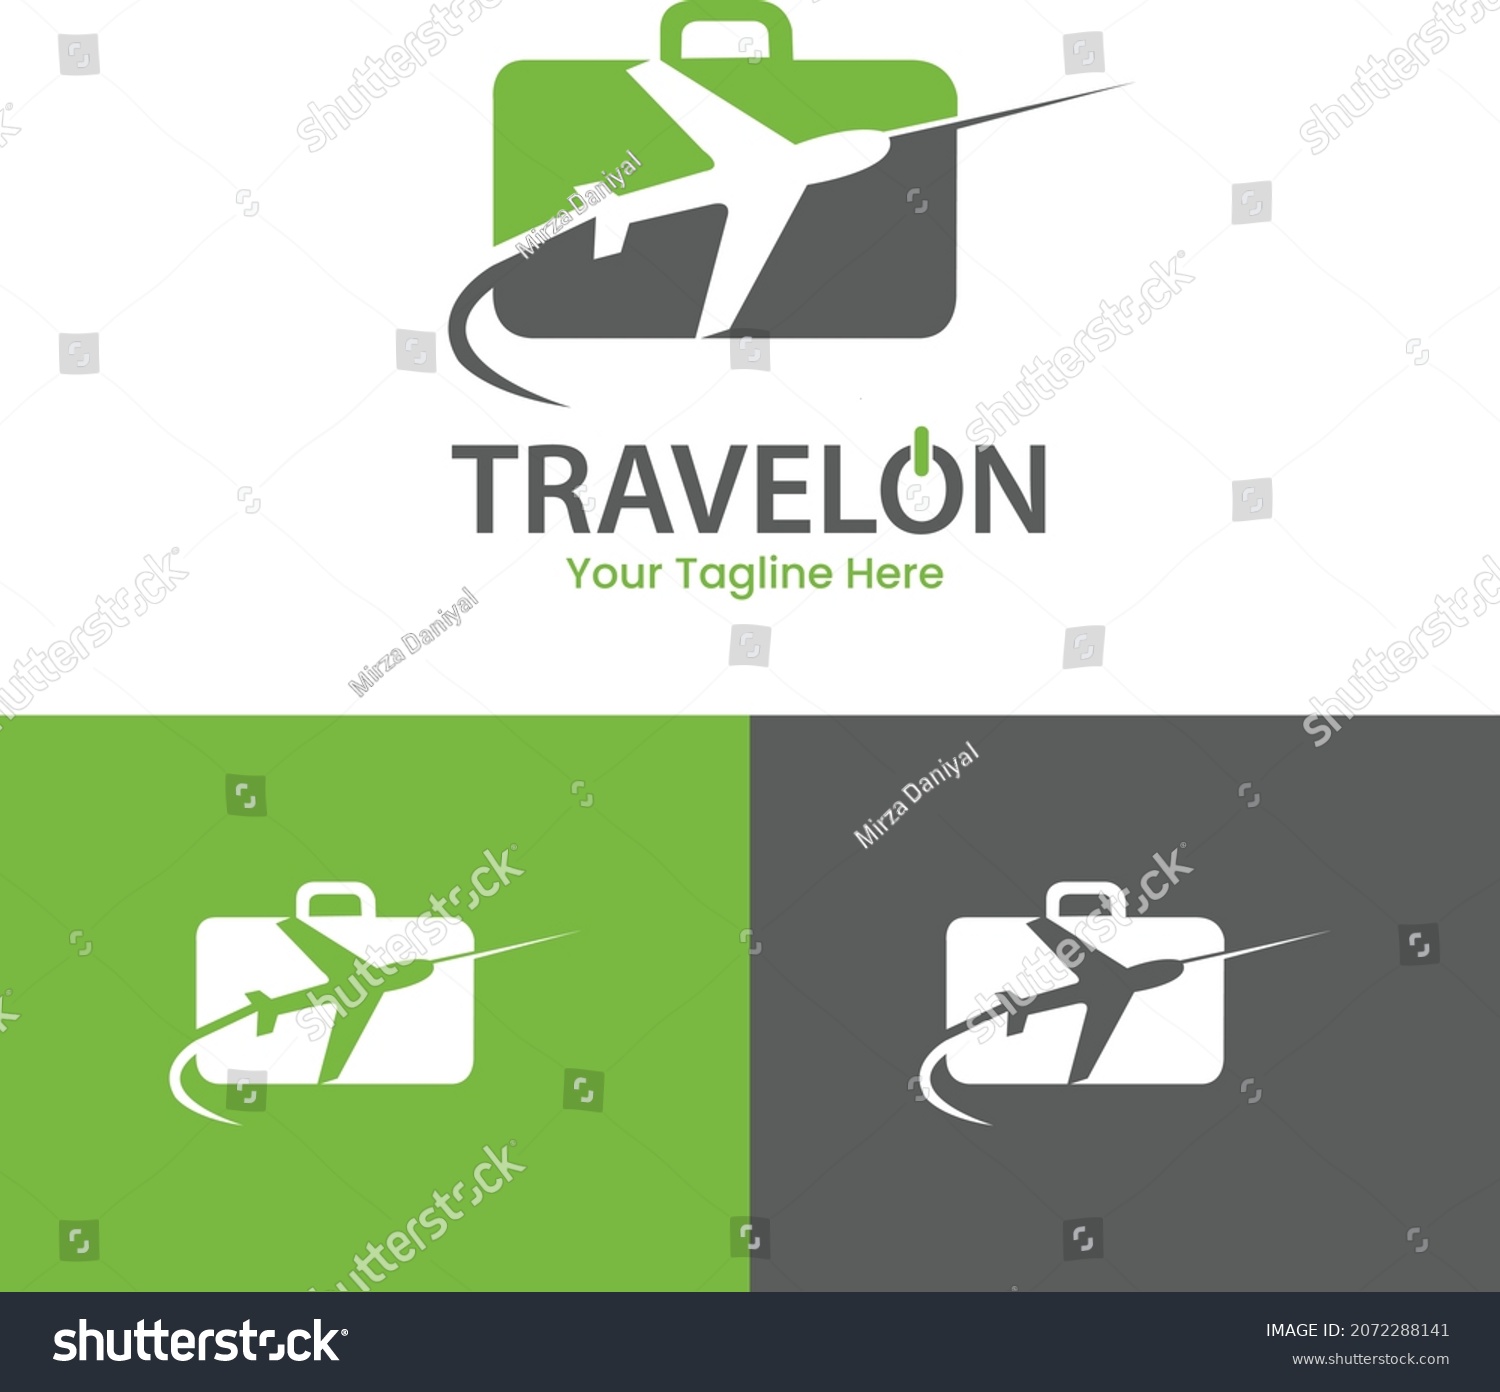 travelon travel agency